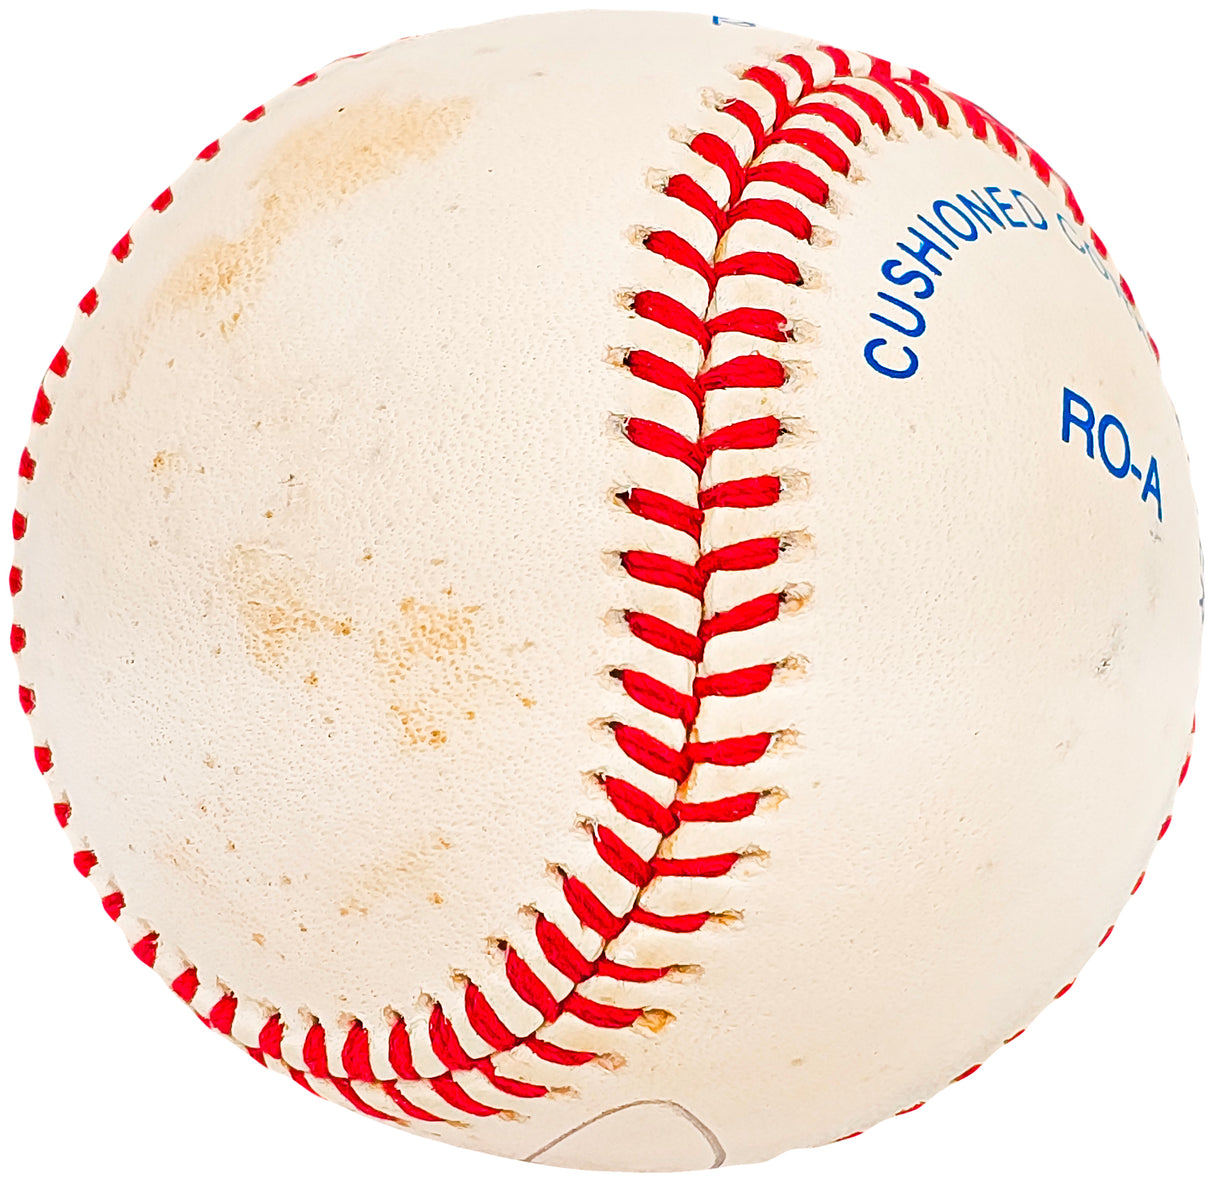 Frank Robinson Autographed Official AL Baseball Baltimore Orioles, Cincinnati Reds Beckett BAS #BH038126